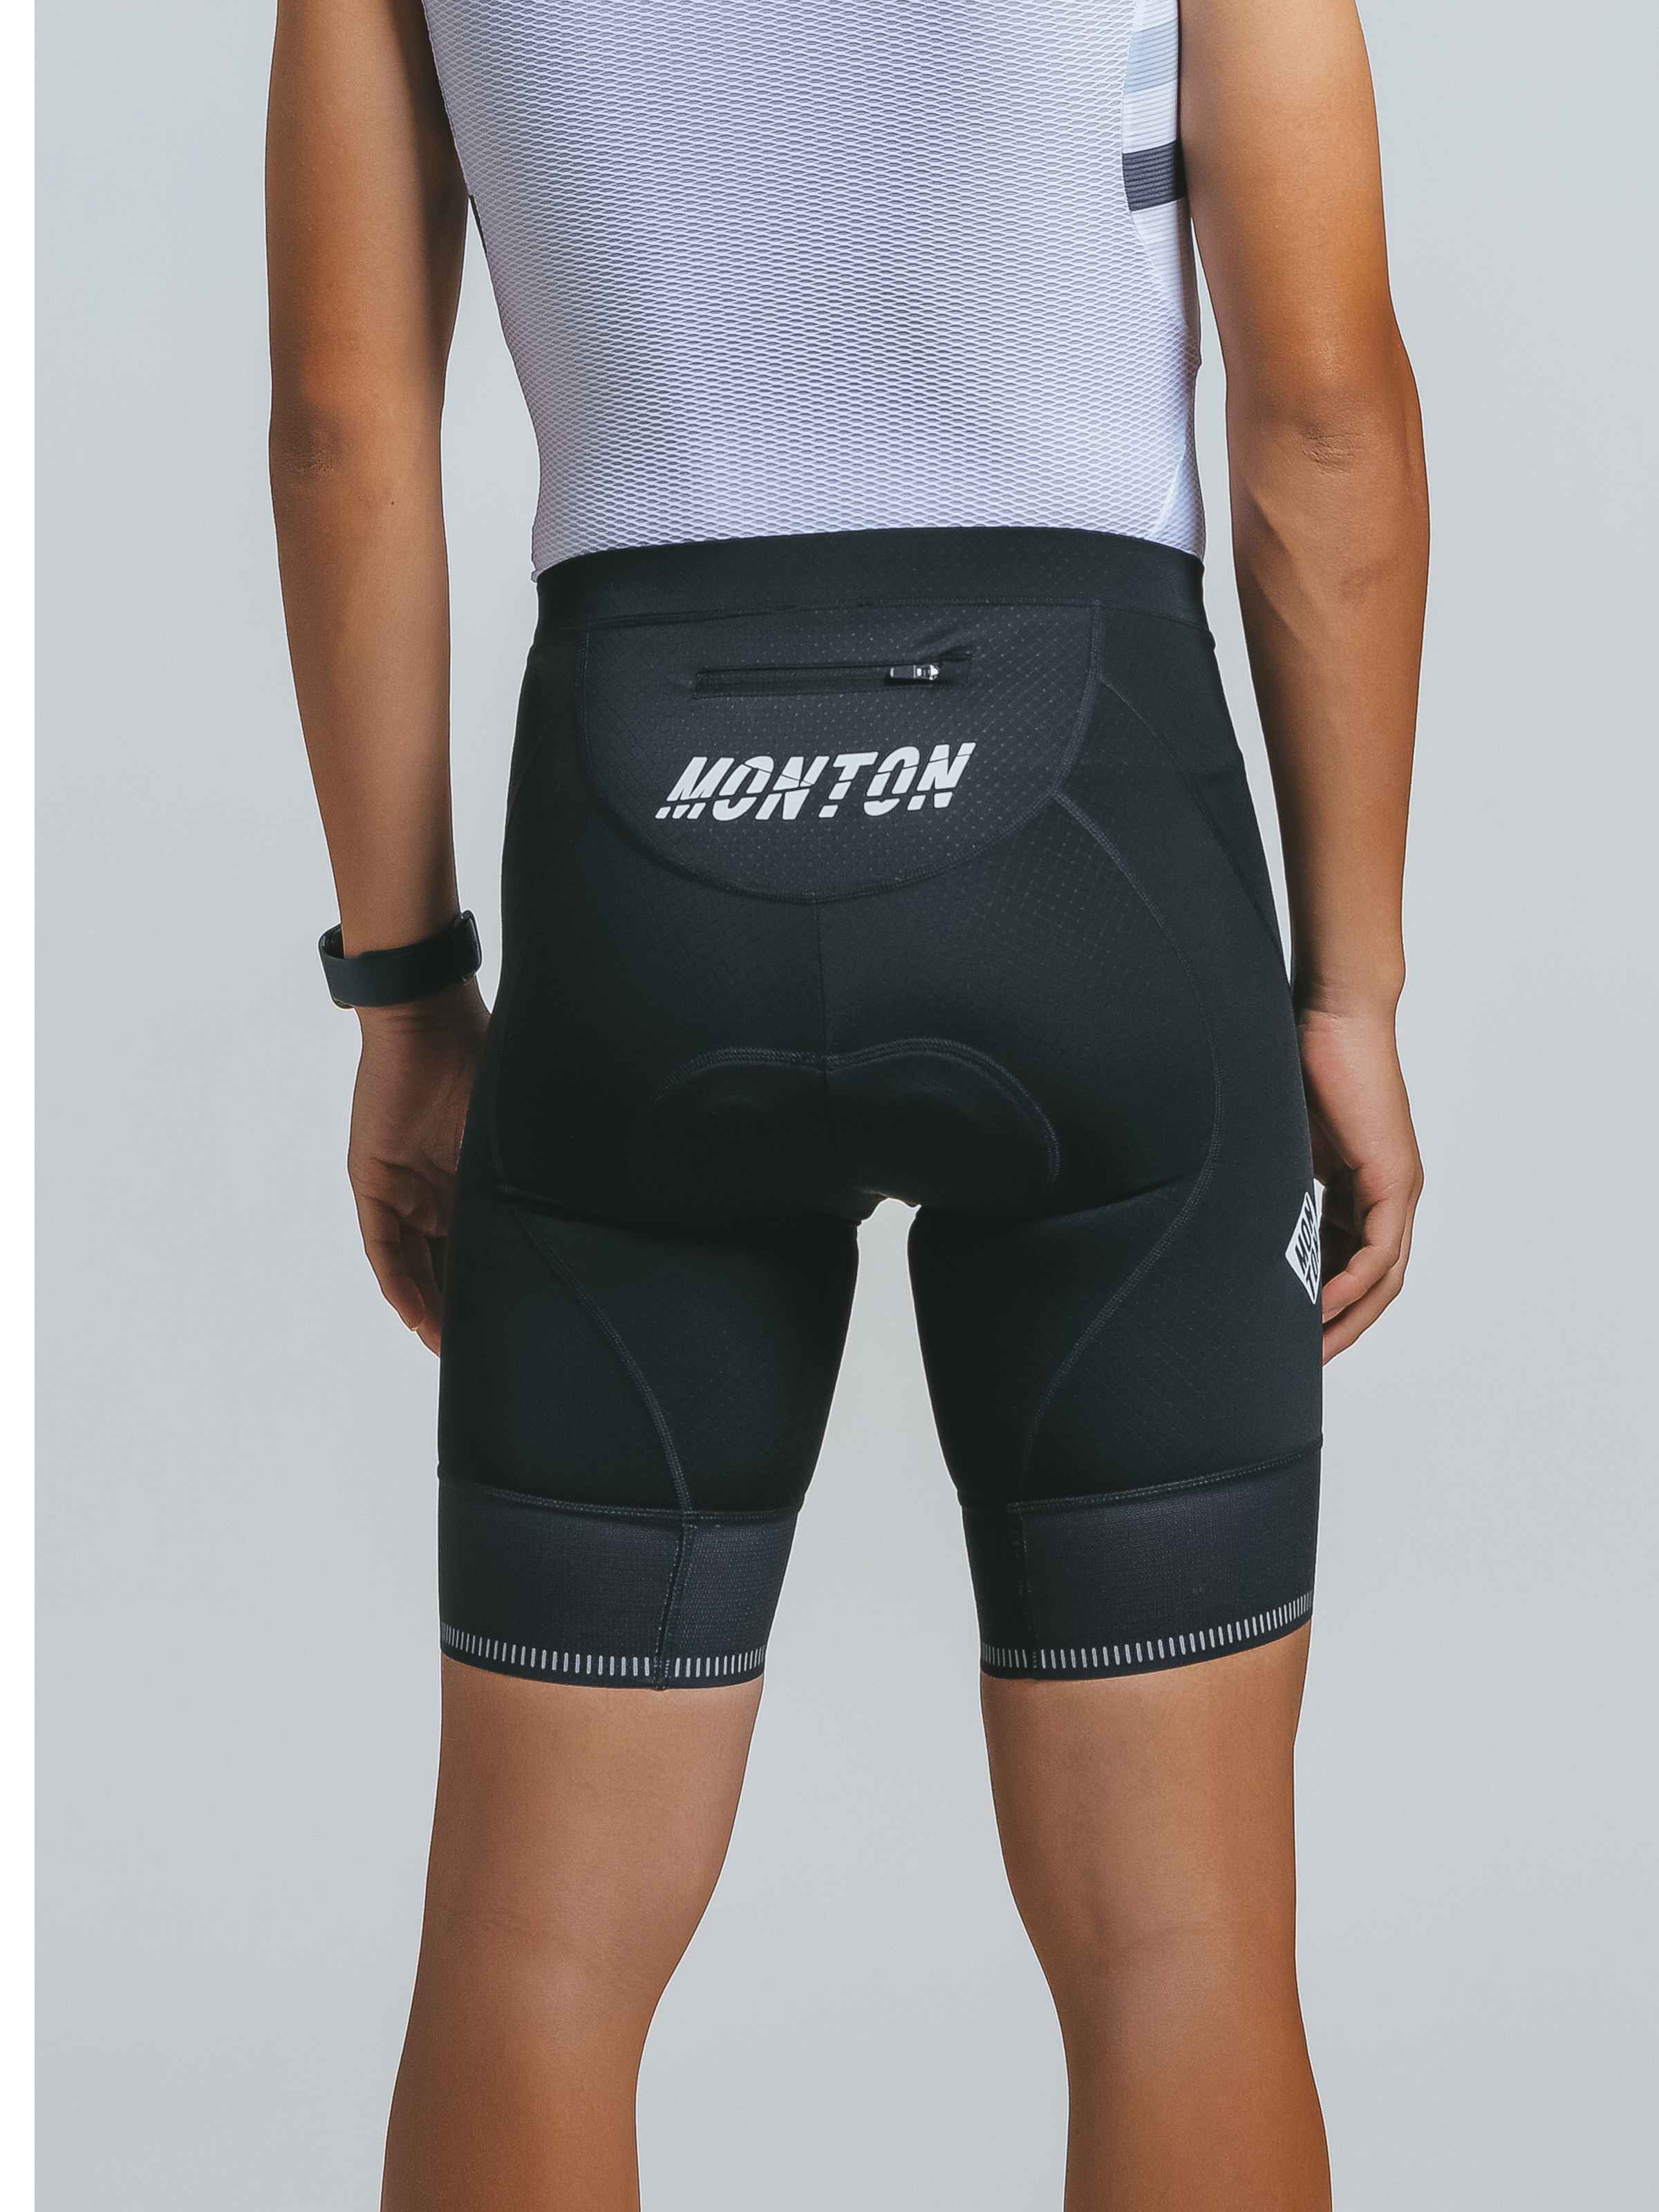 black triathlon shorts